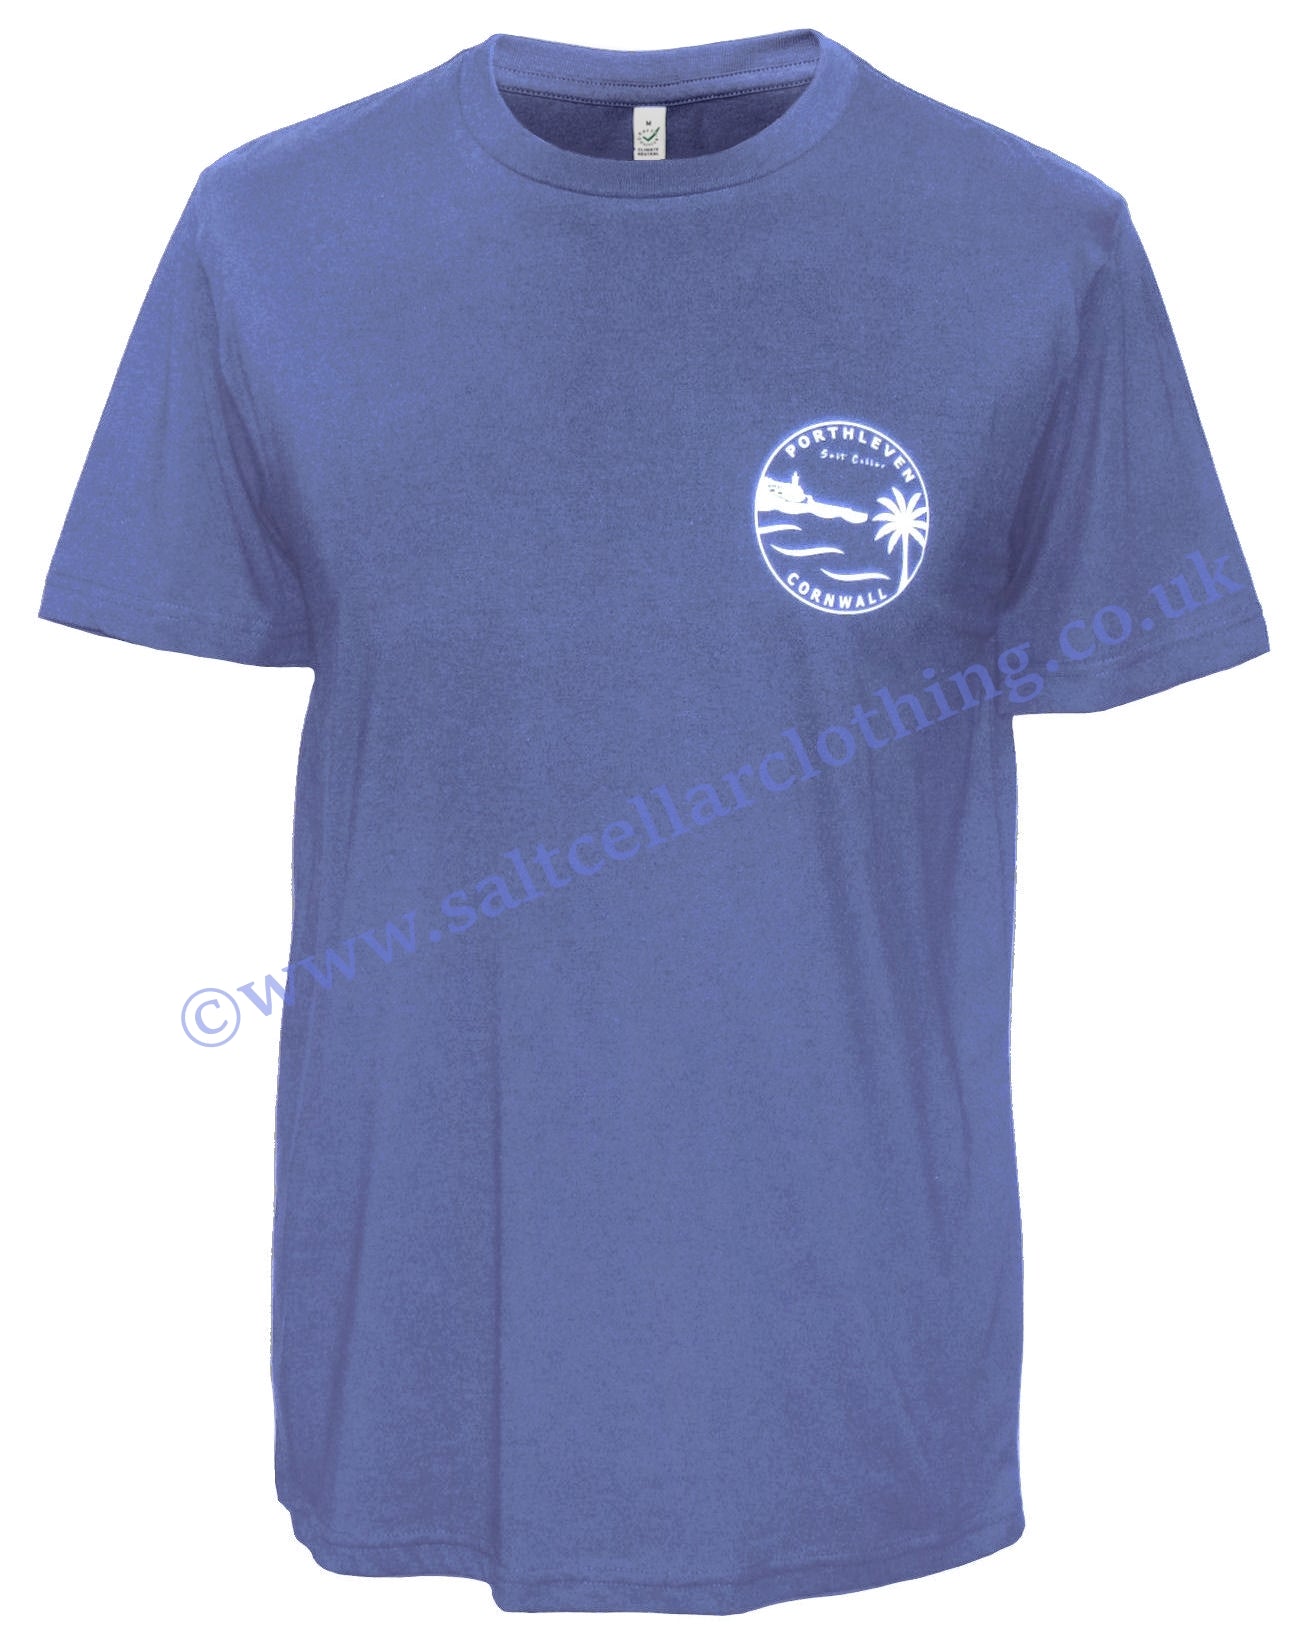 Salt Cellar Mens Porthleven, Cornwall Print T-Shirt - Denim Blue